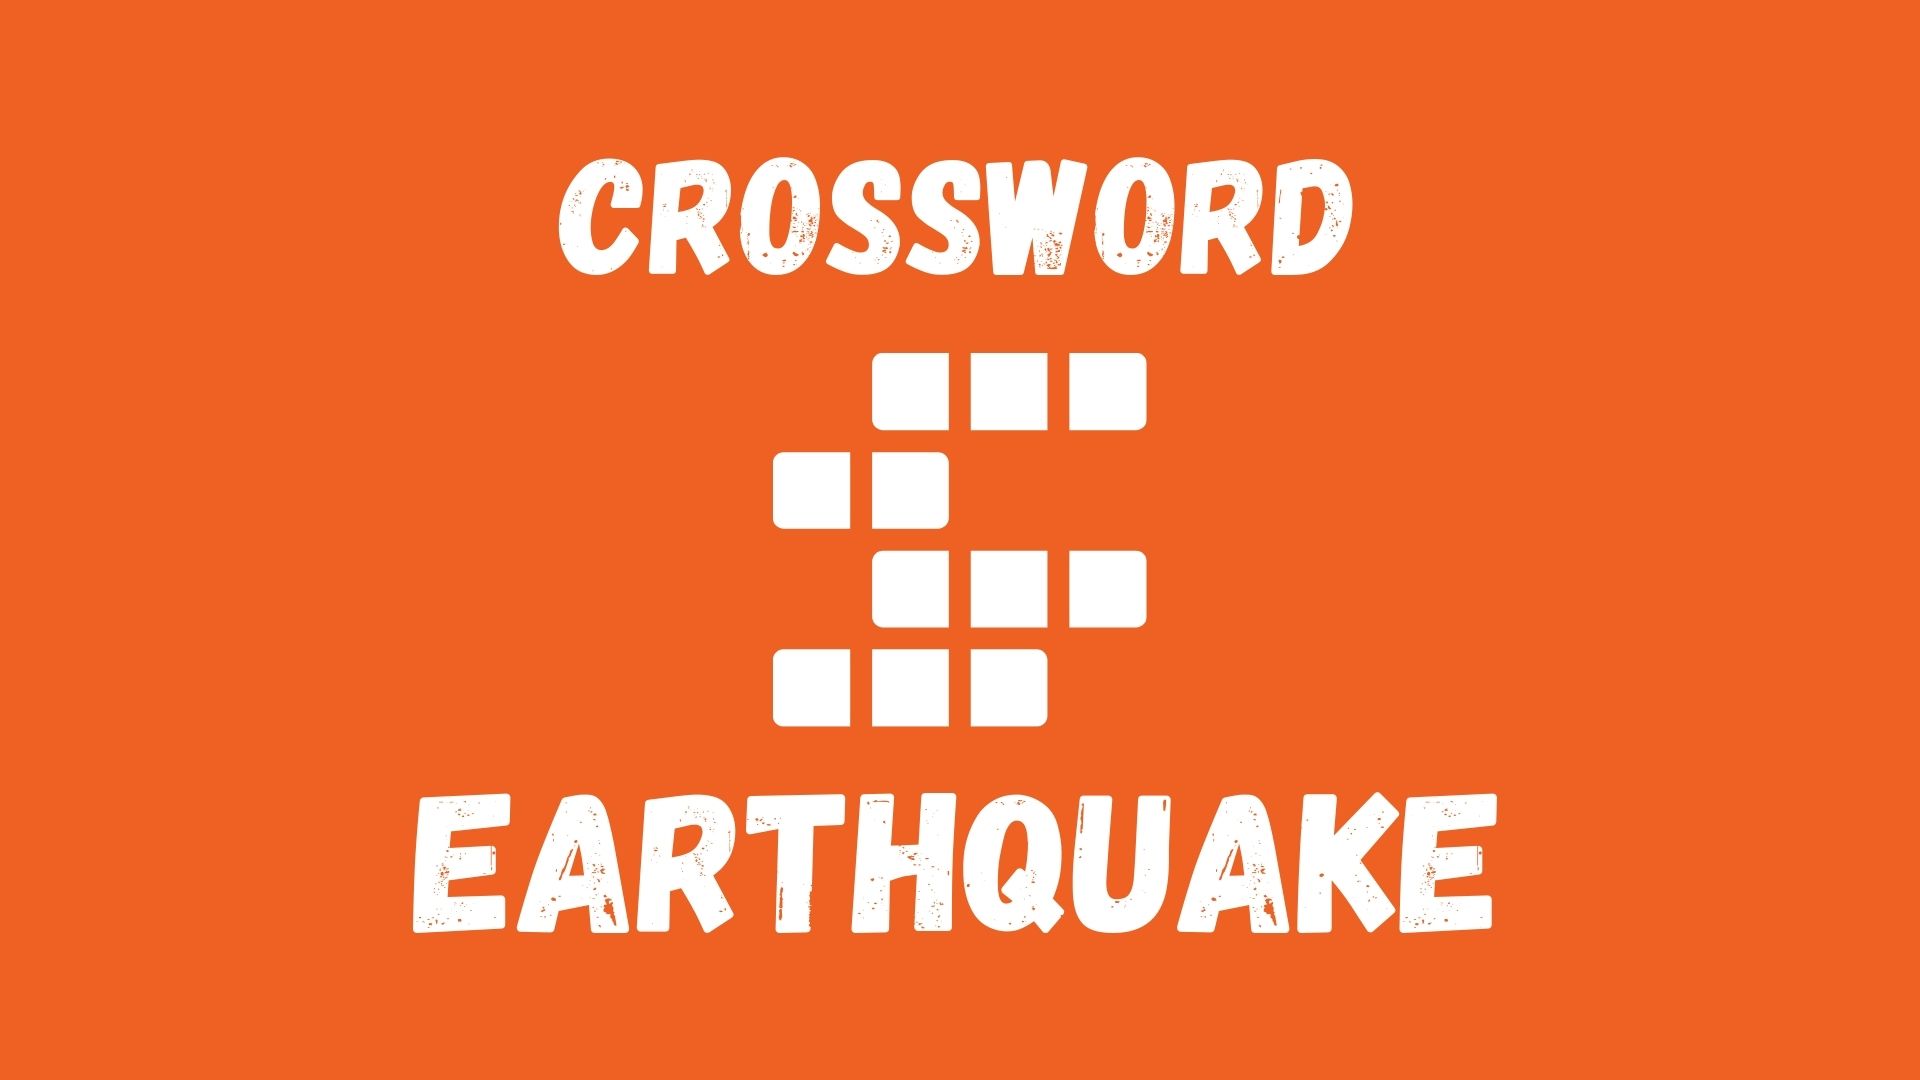 English Plus Vocabulary Builder Crossword EP636 Earthquake